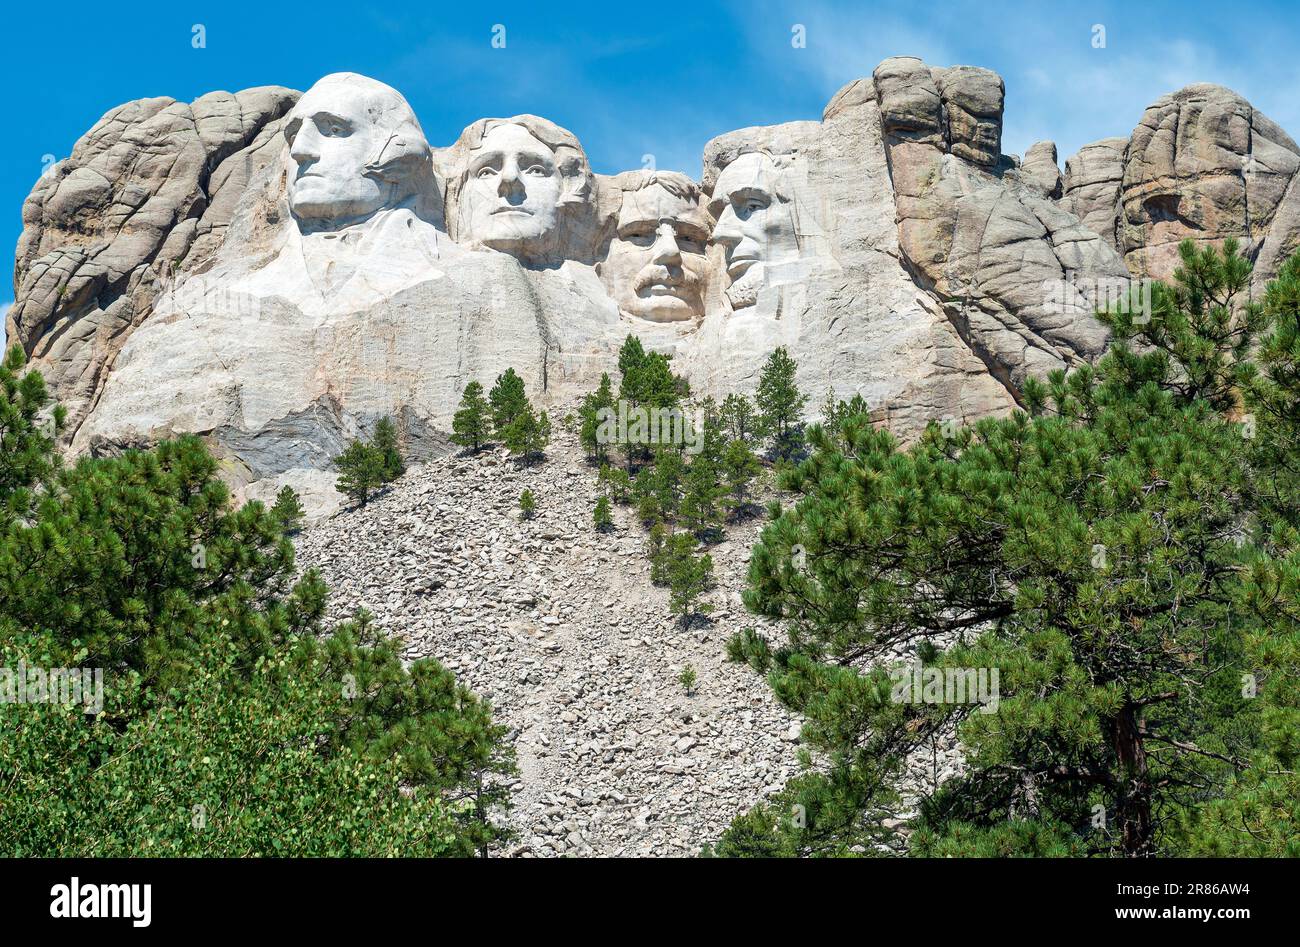 United States presidents carved faces, Mount Rushmore national memorial, South Dakota, USA. Stock Photo